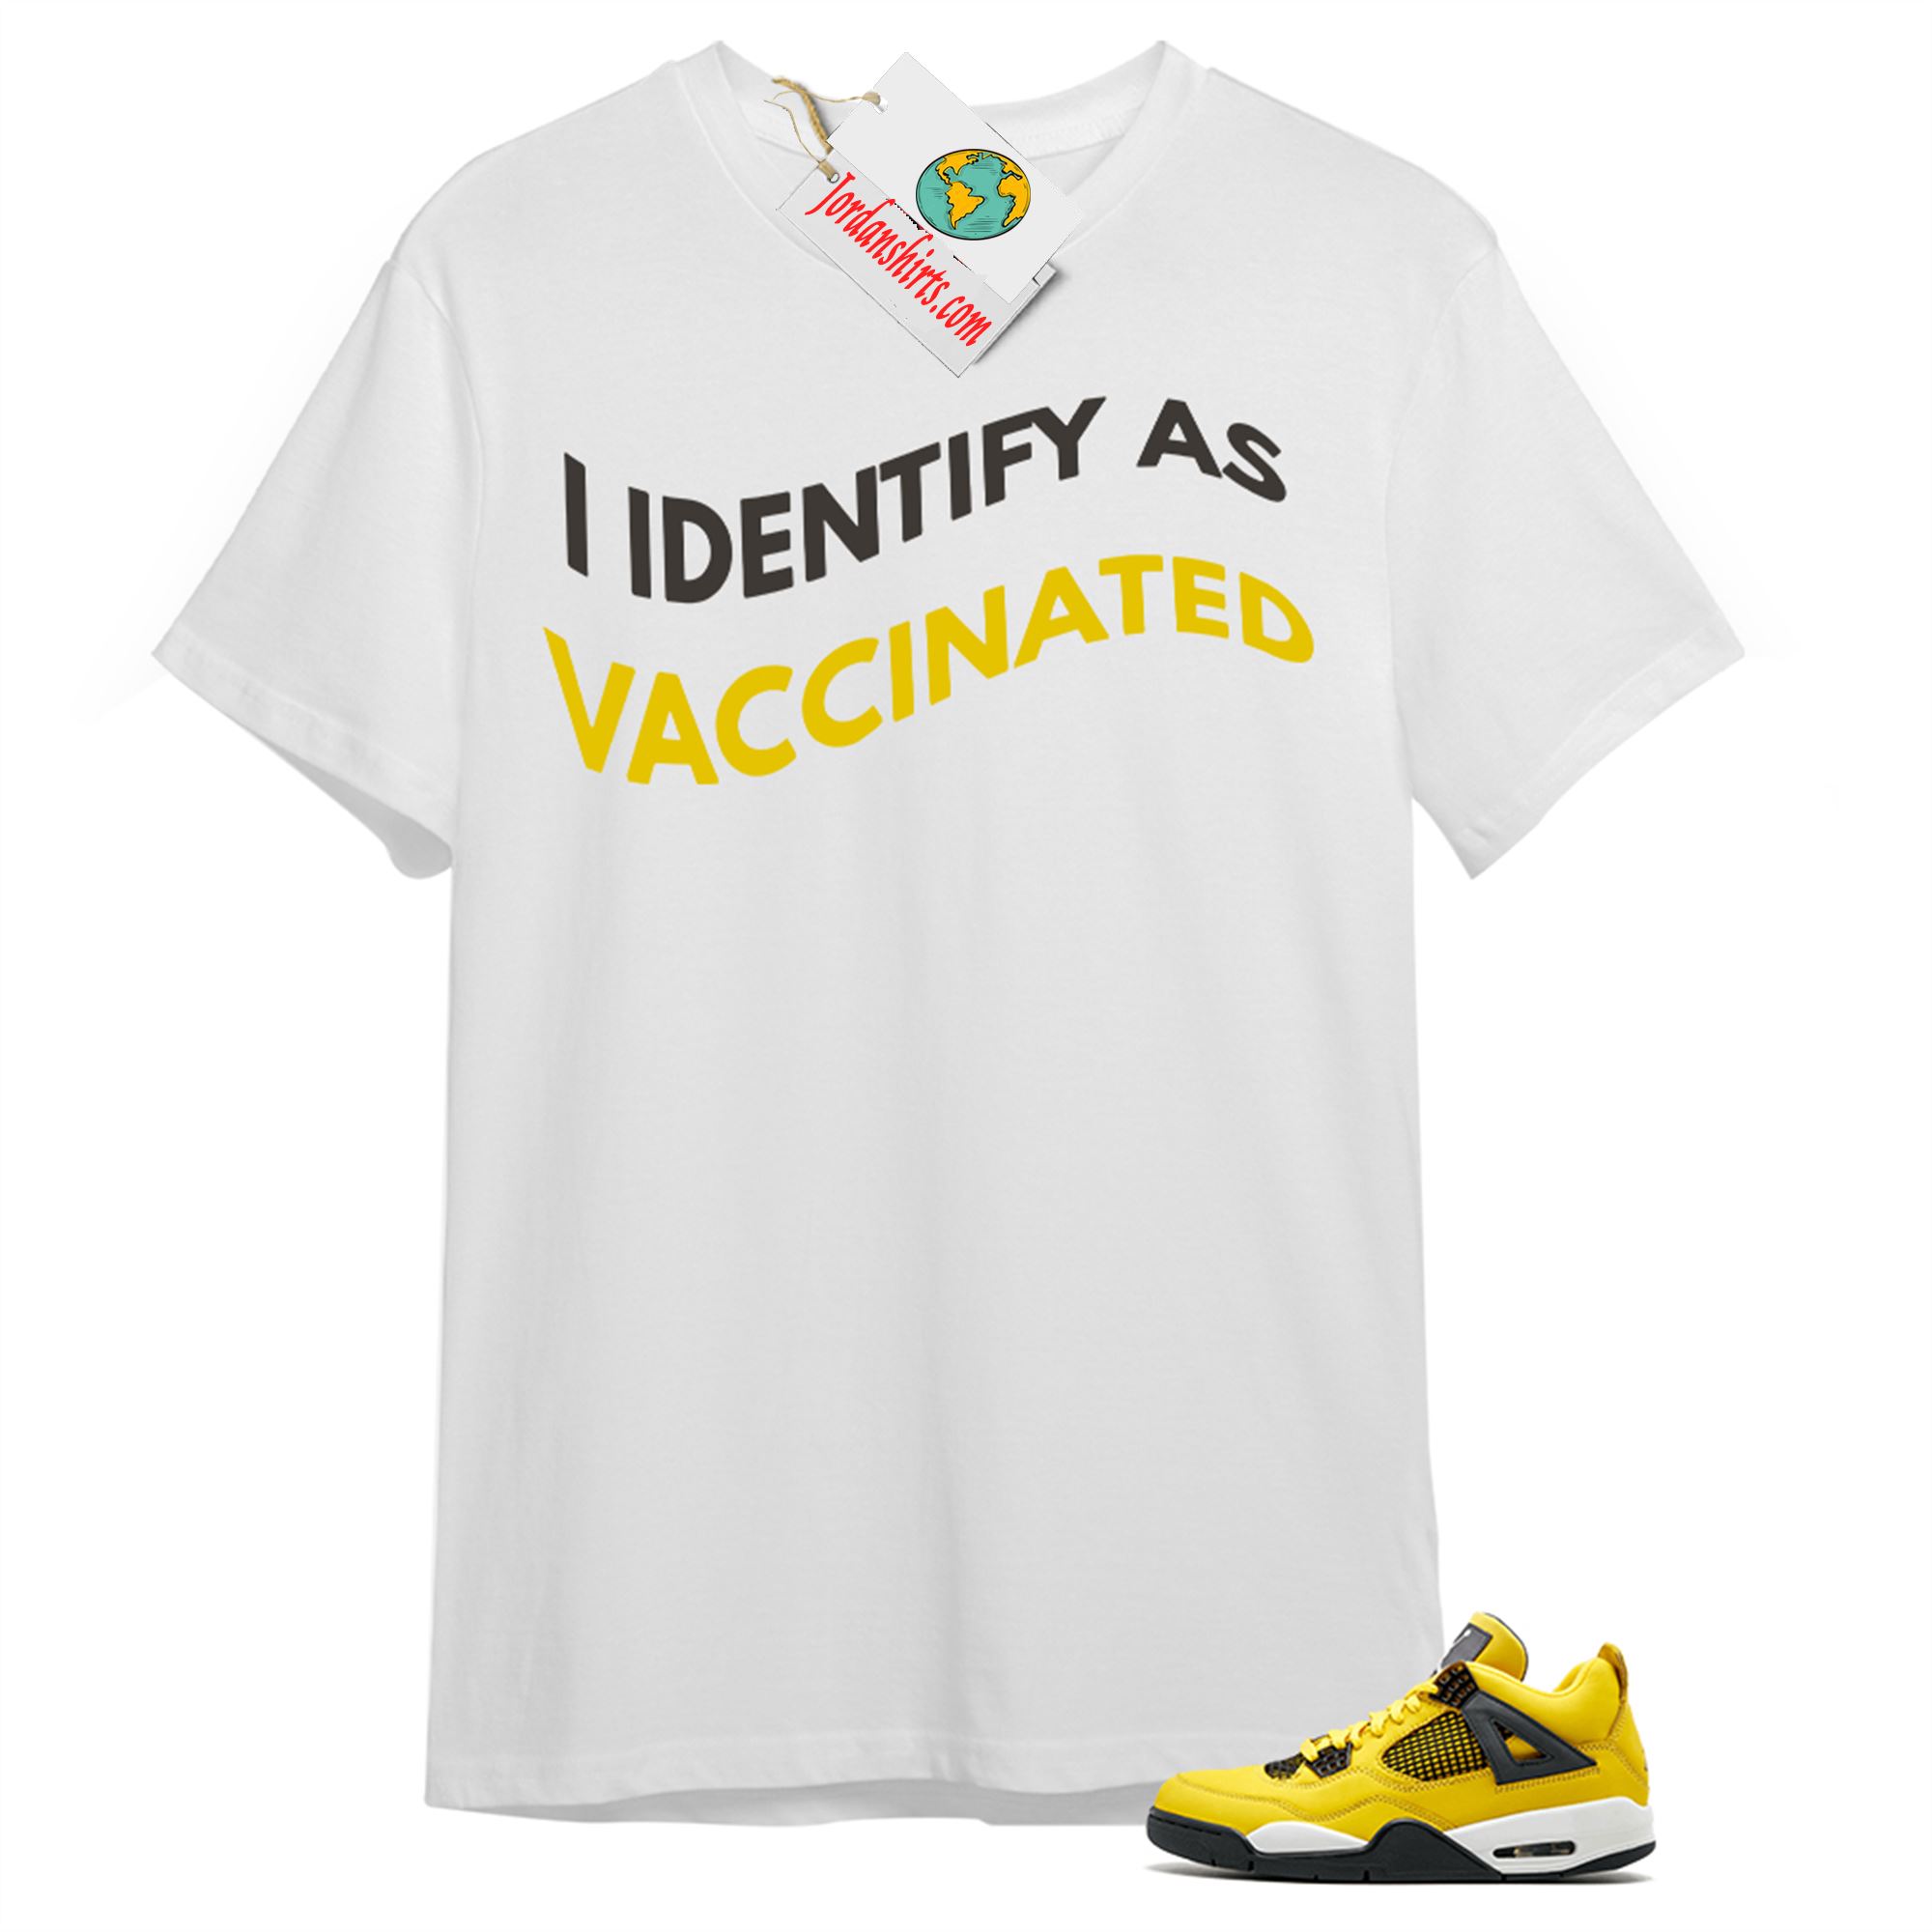 Jordan 4 Shirt, I Identify As Vaccinated White T-shirt Air Jordan 4 Tour Yellow Lightning 4s Full Size Up To 5xl